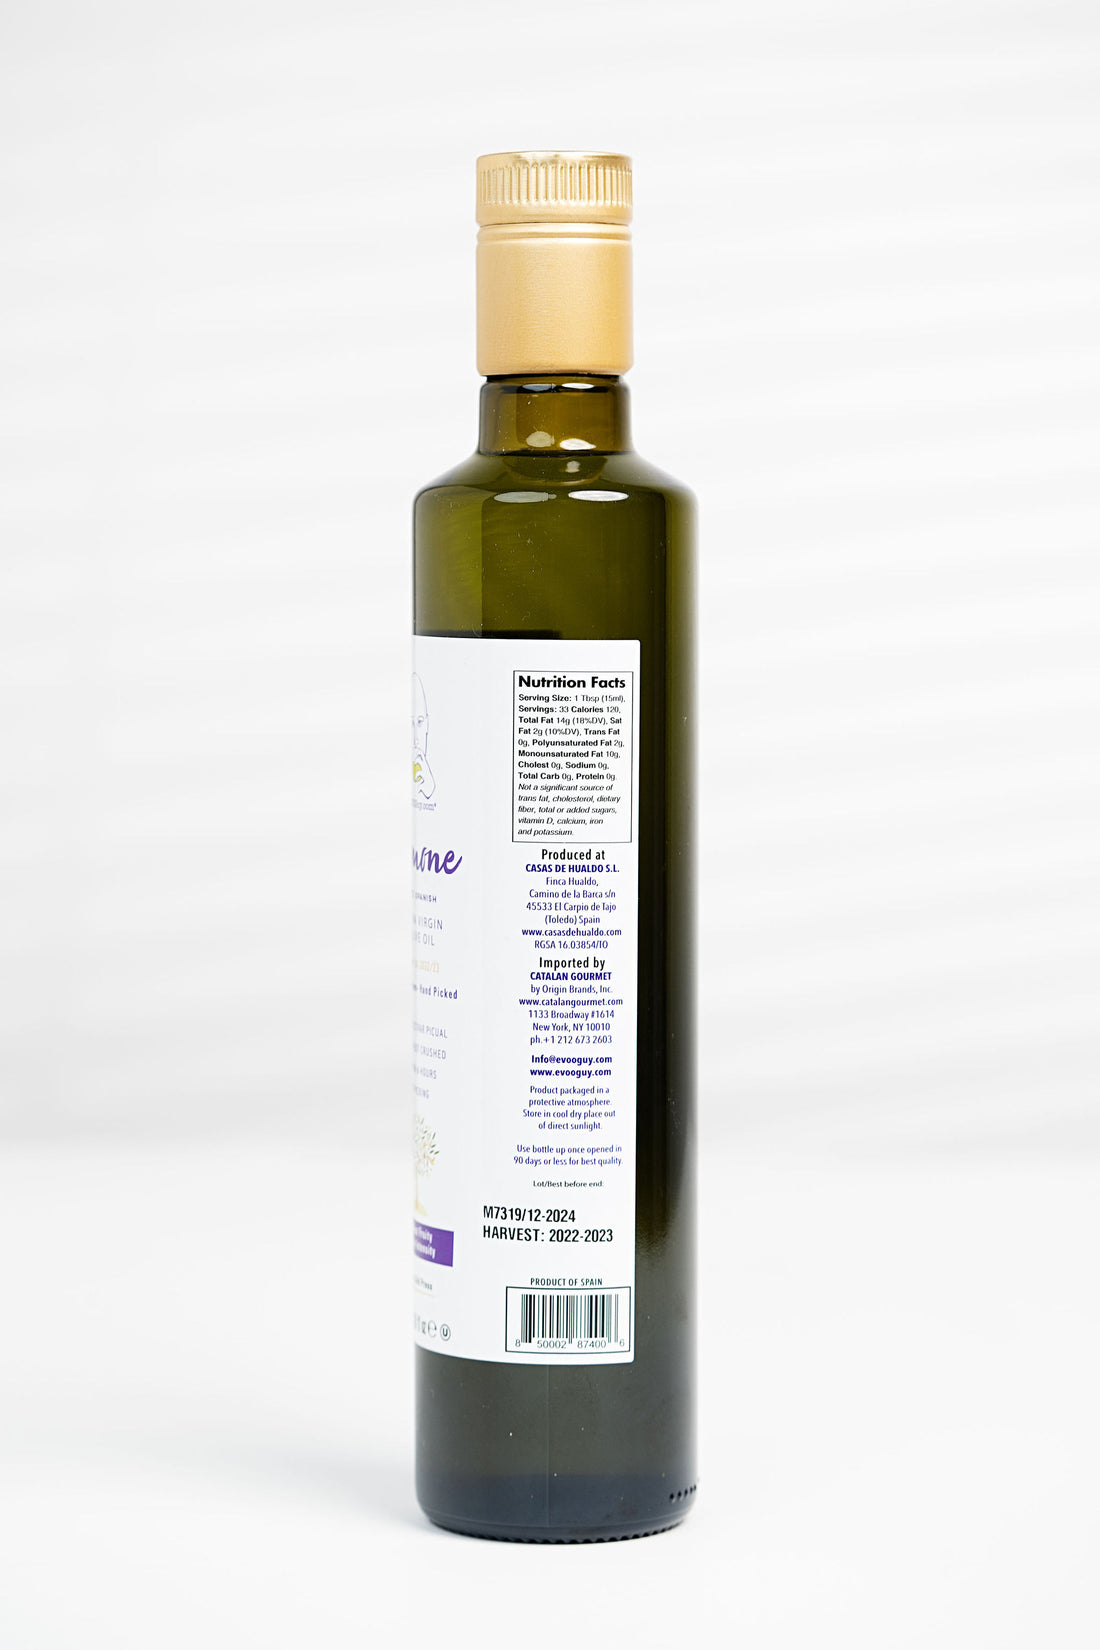 B EVOOGuy.com(R) Semone Extra Virgin Olive Oil- Premium- 100% Spanish Picual - 3 Bottles-HARVEST 2023/24 JUST ARRIVED!